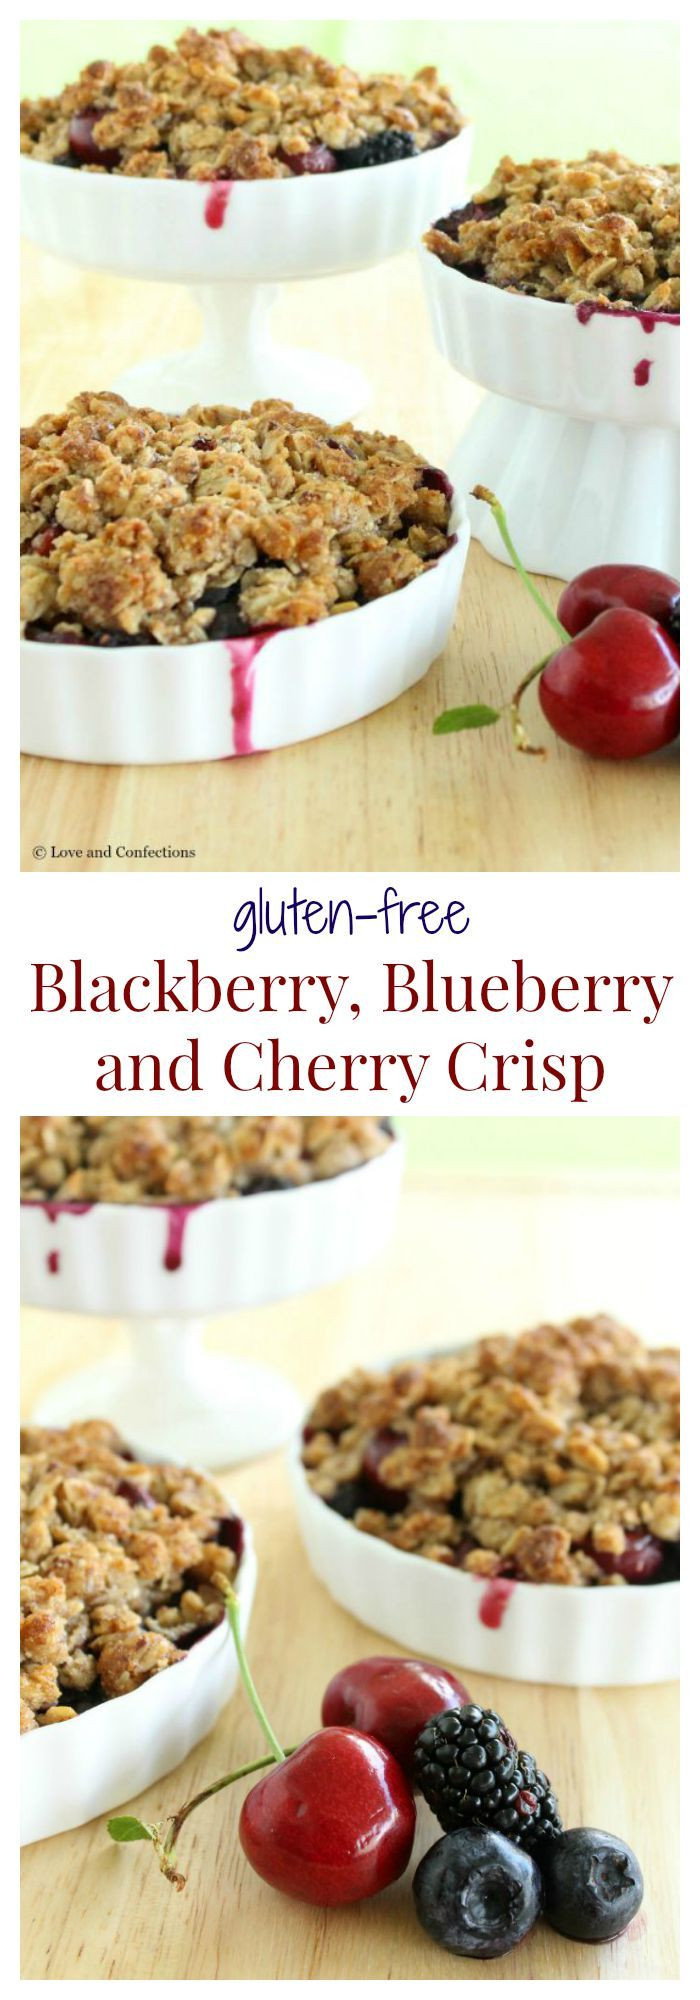 Gluten Free Blackberry Recipes
 Gluten Free Blackberry Blueberry and Cherry Crisp